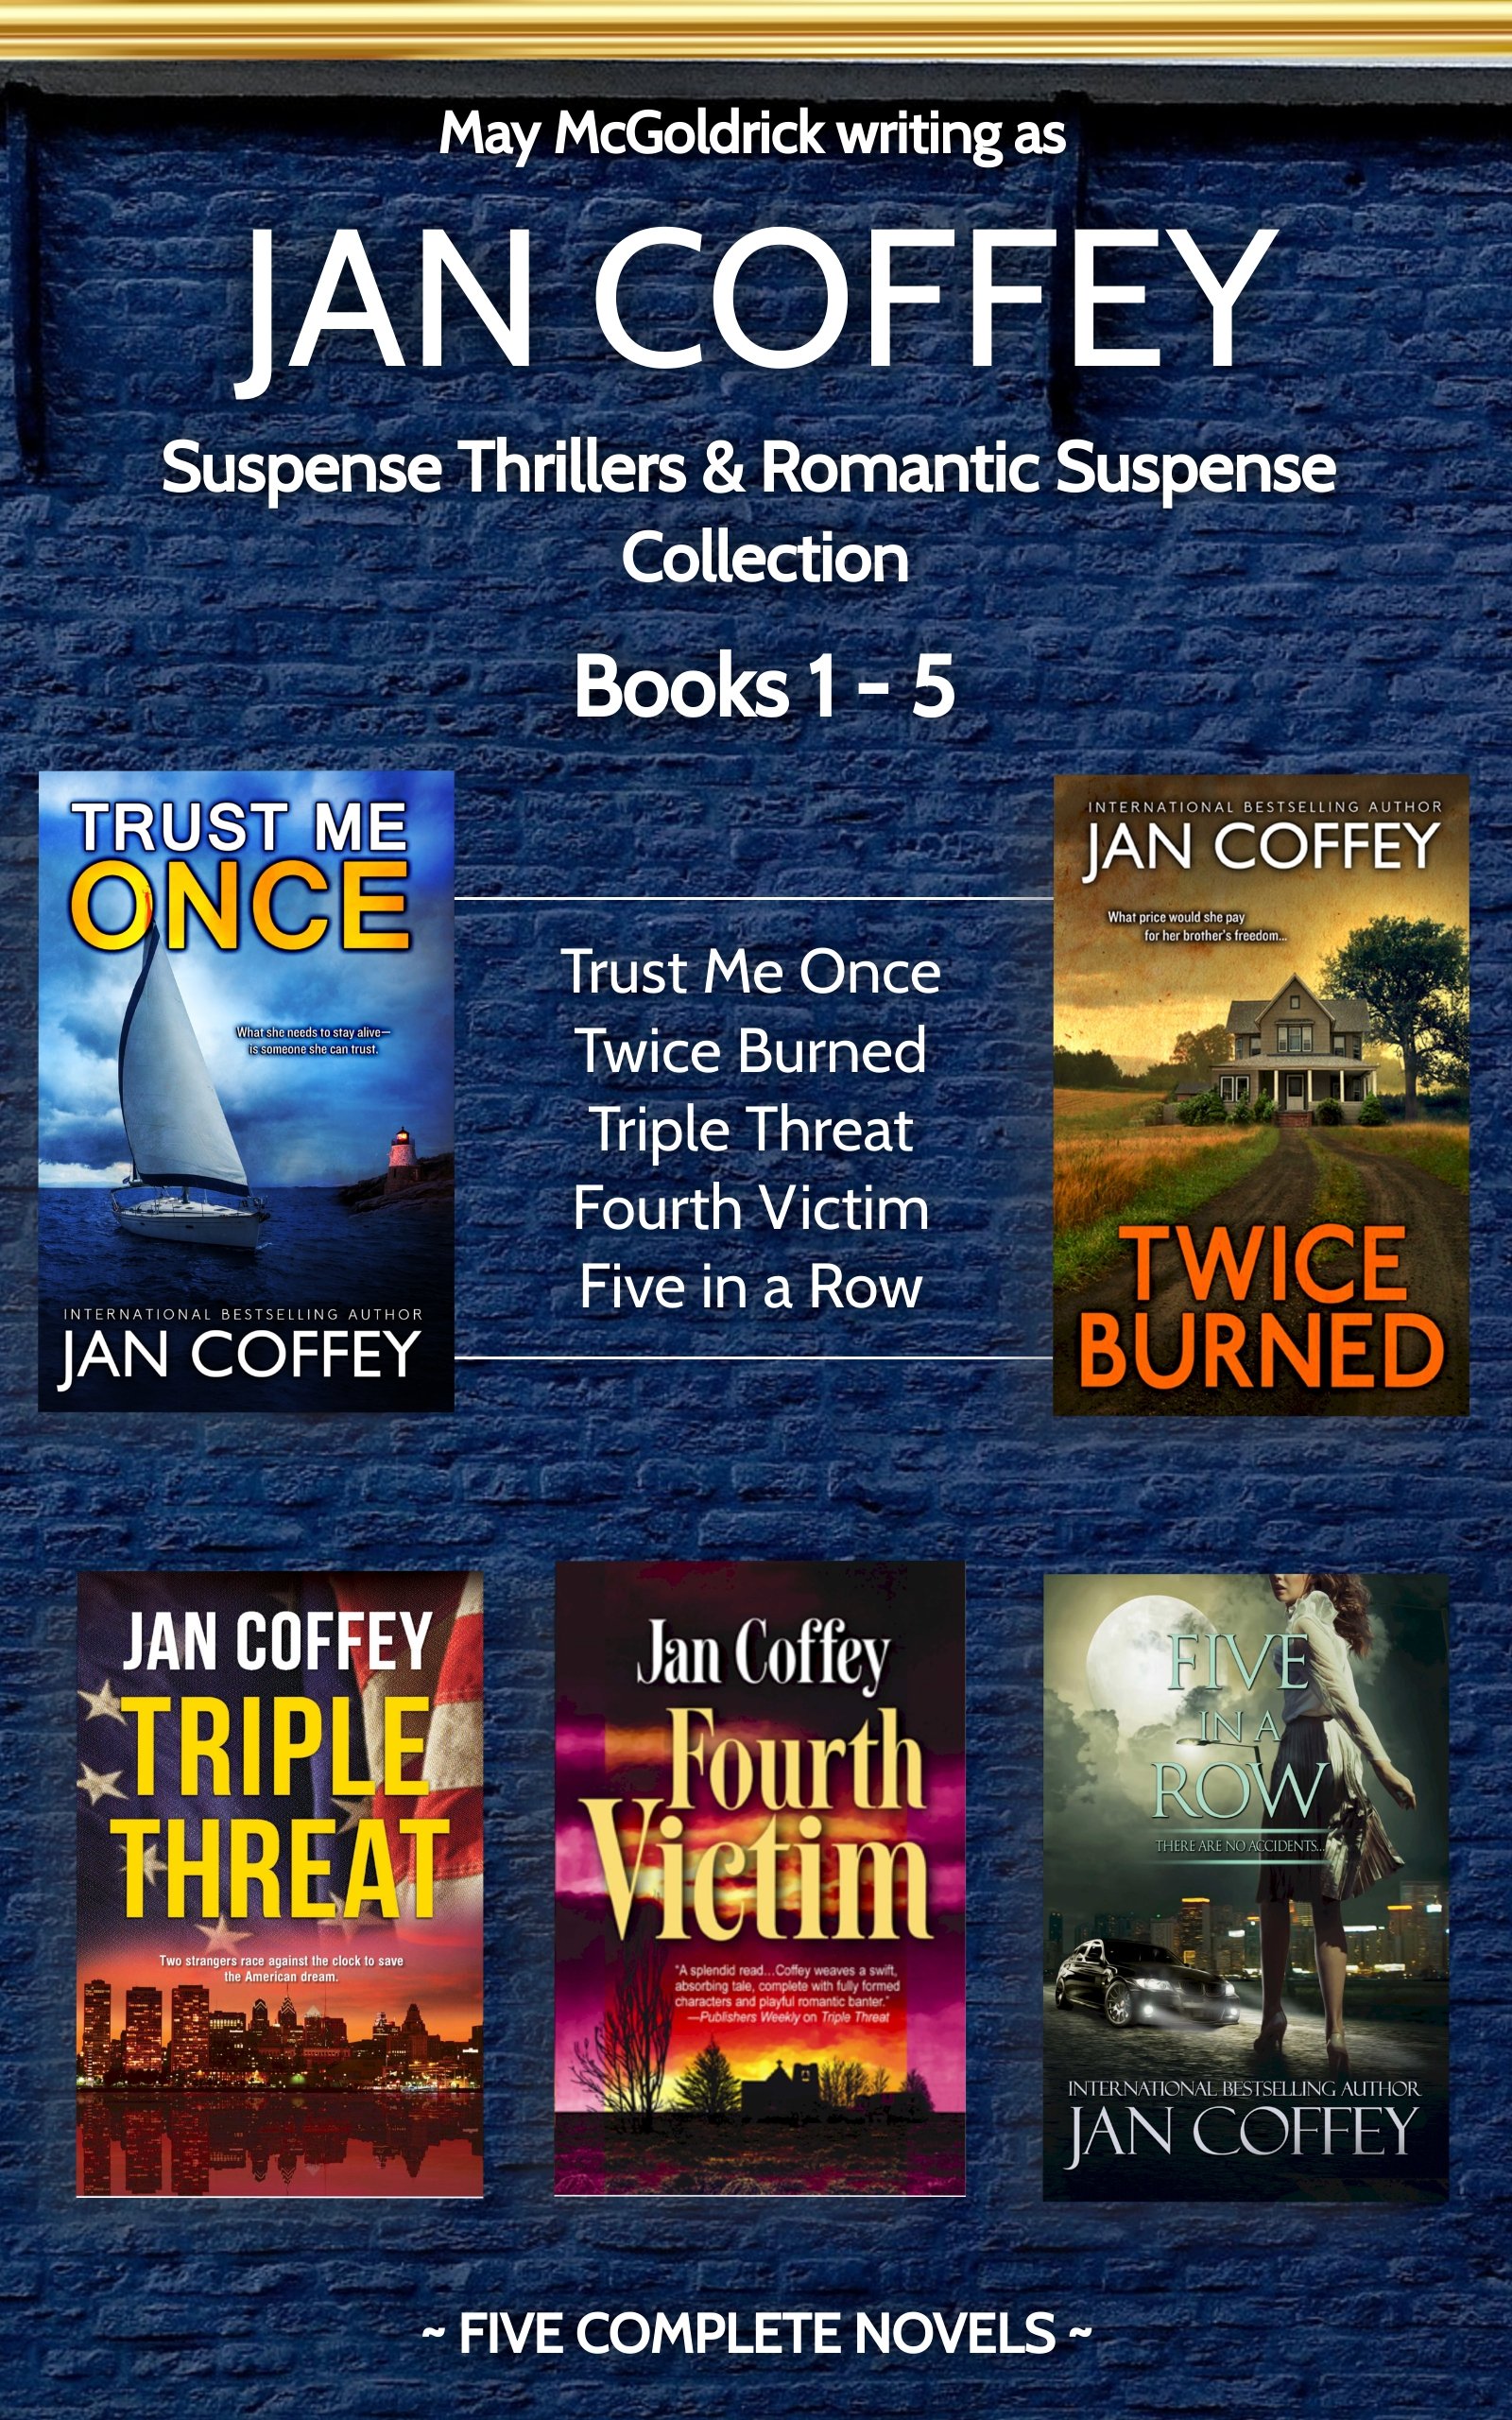 Jan Coffey Suspense Thrillers and Romantic Suspense - Books 1-5 cover 2.jpeg